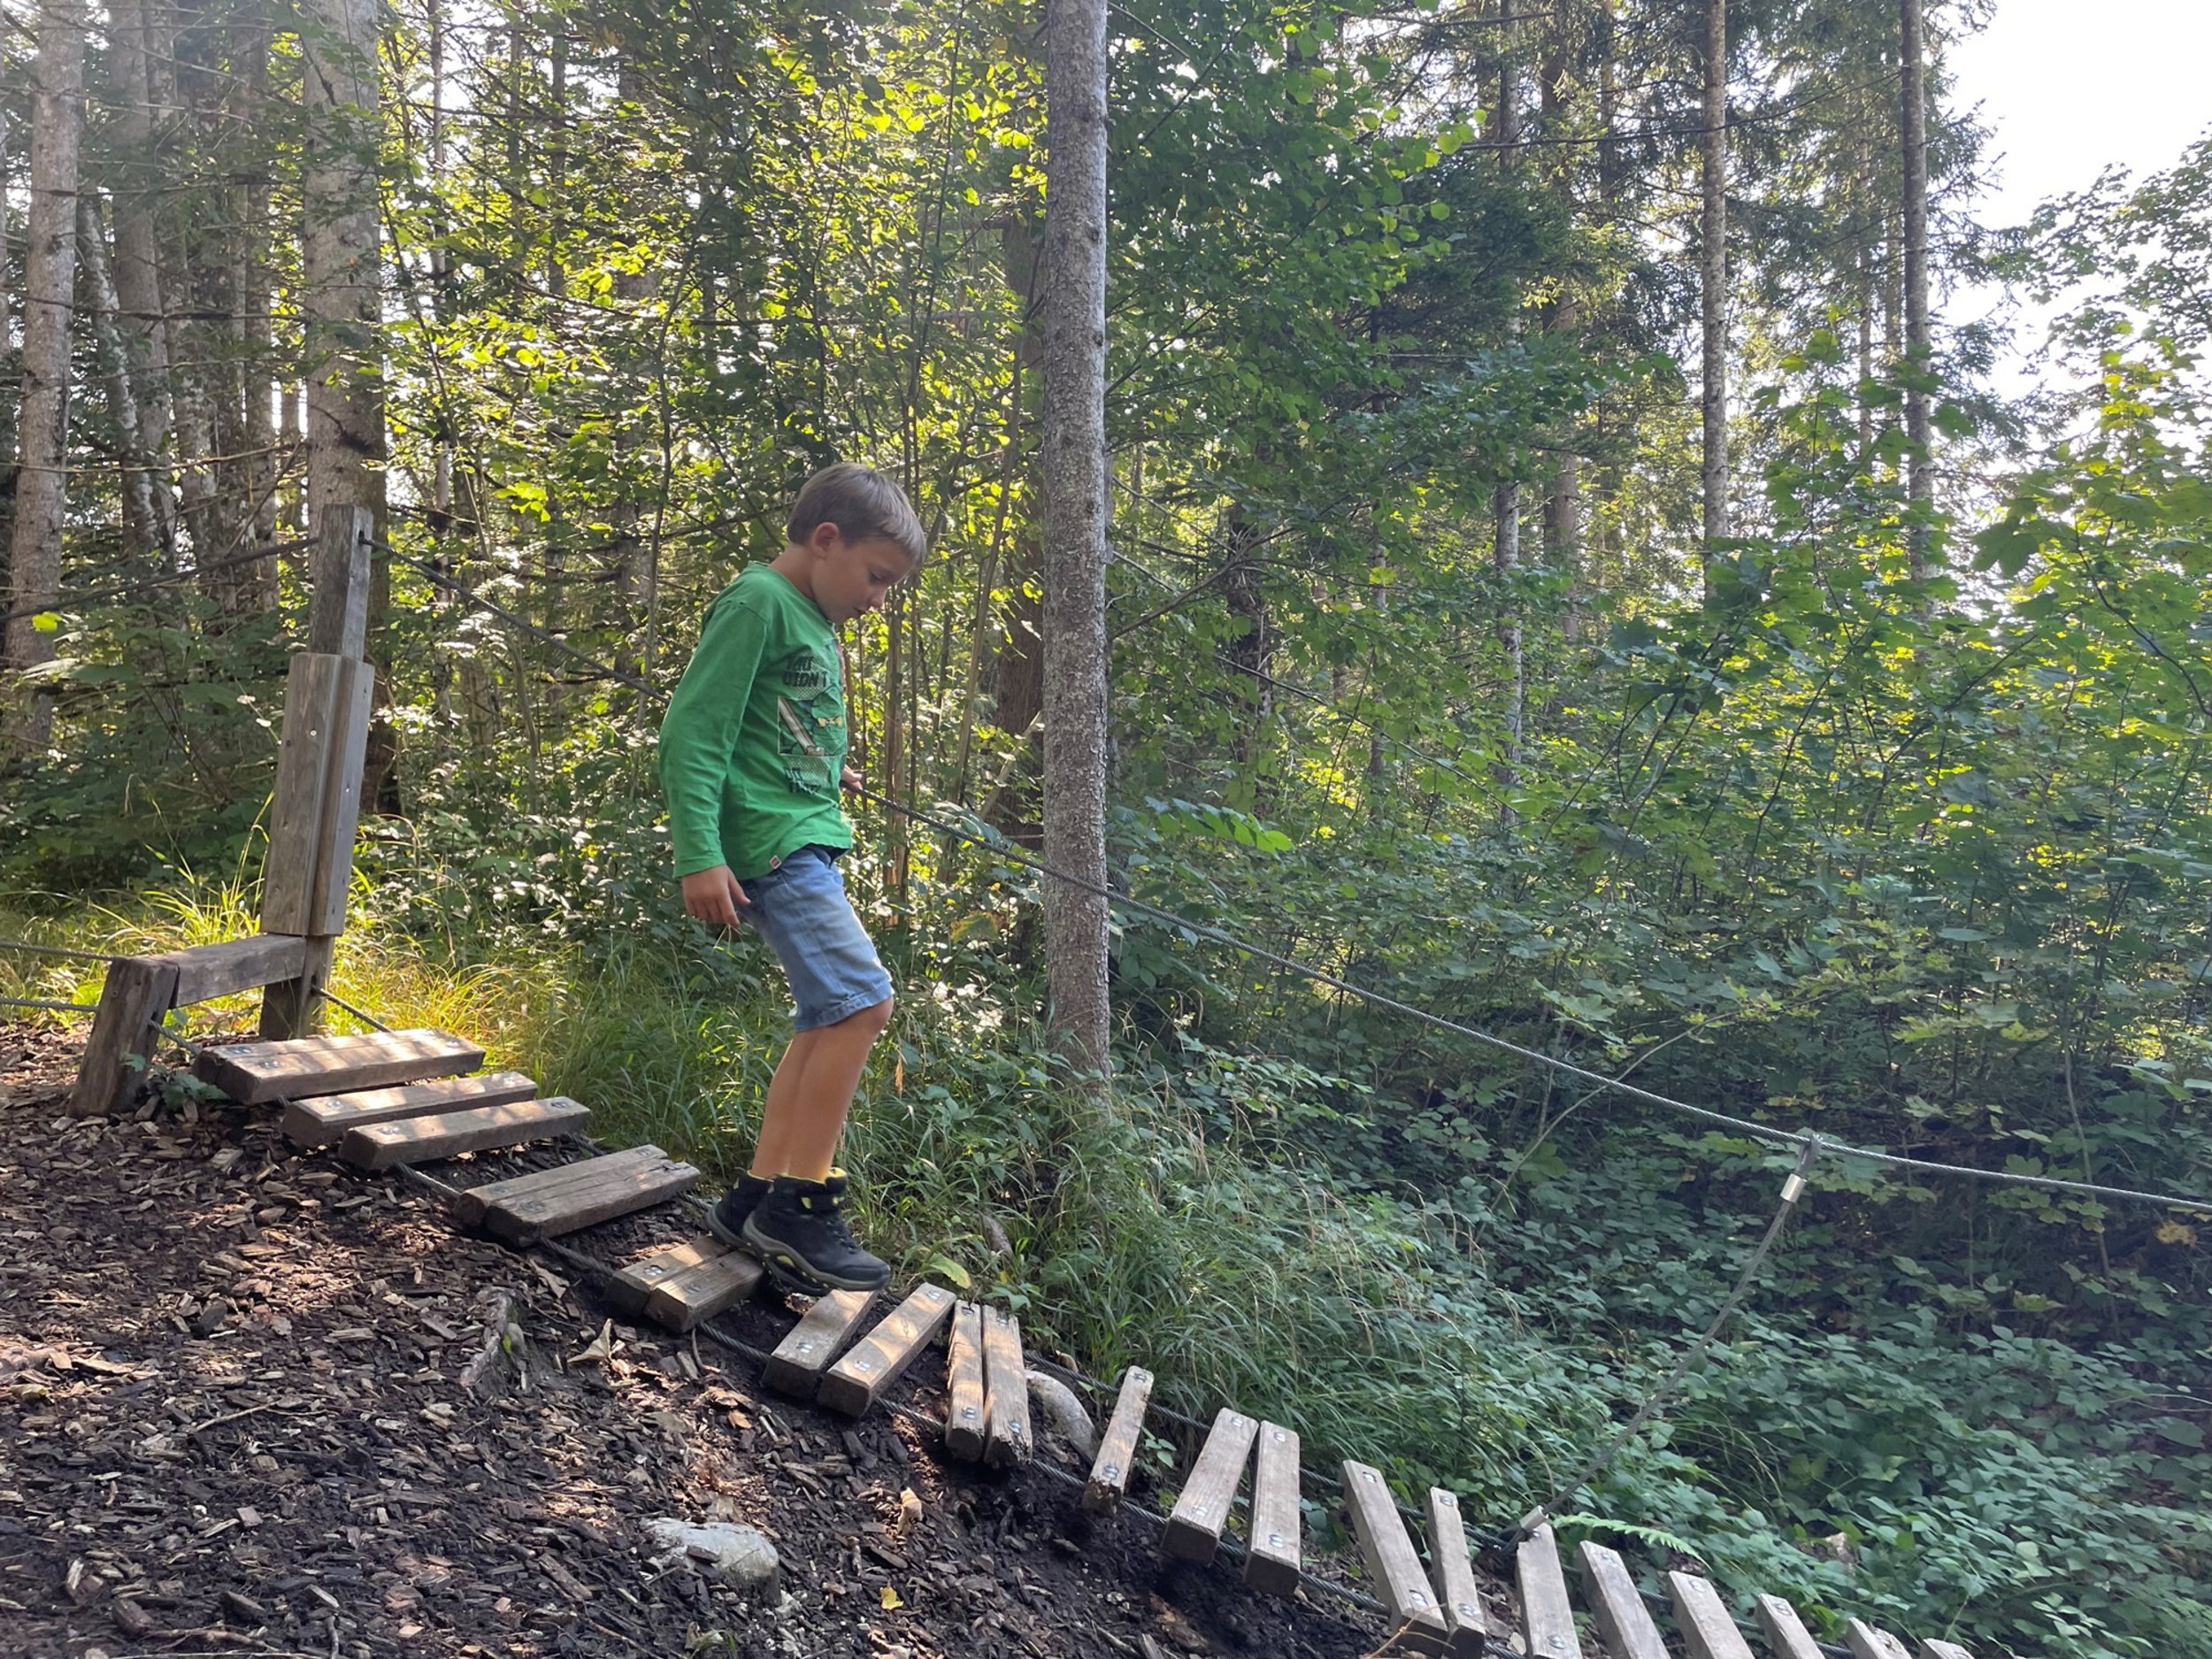 Kids' hiking trail adventure bridge